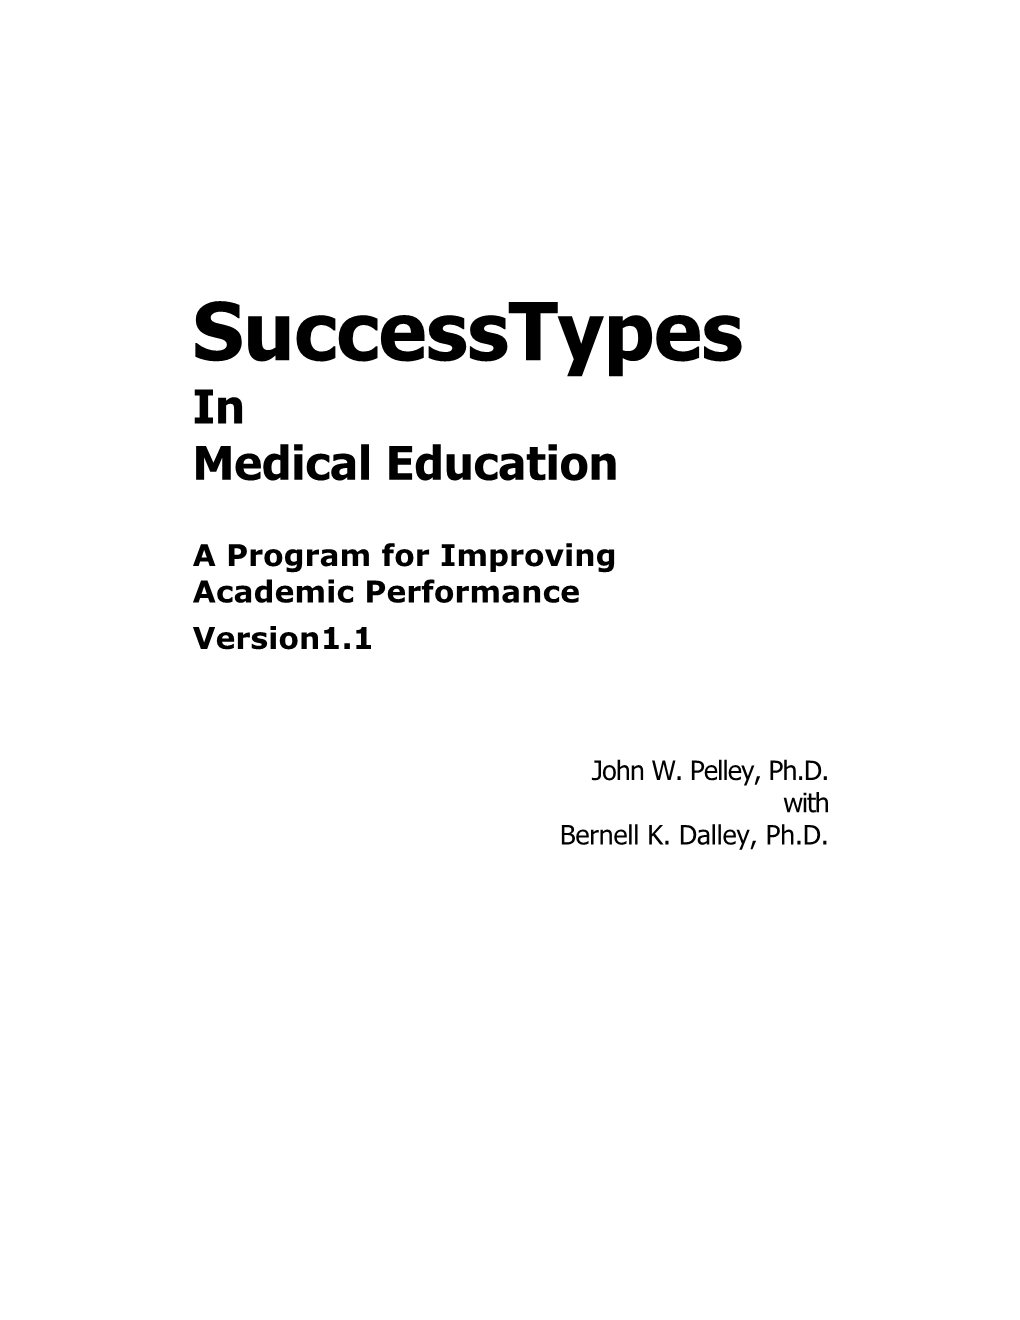 Successtypes in Medical Education